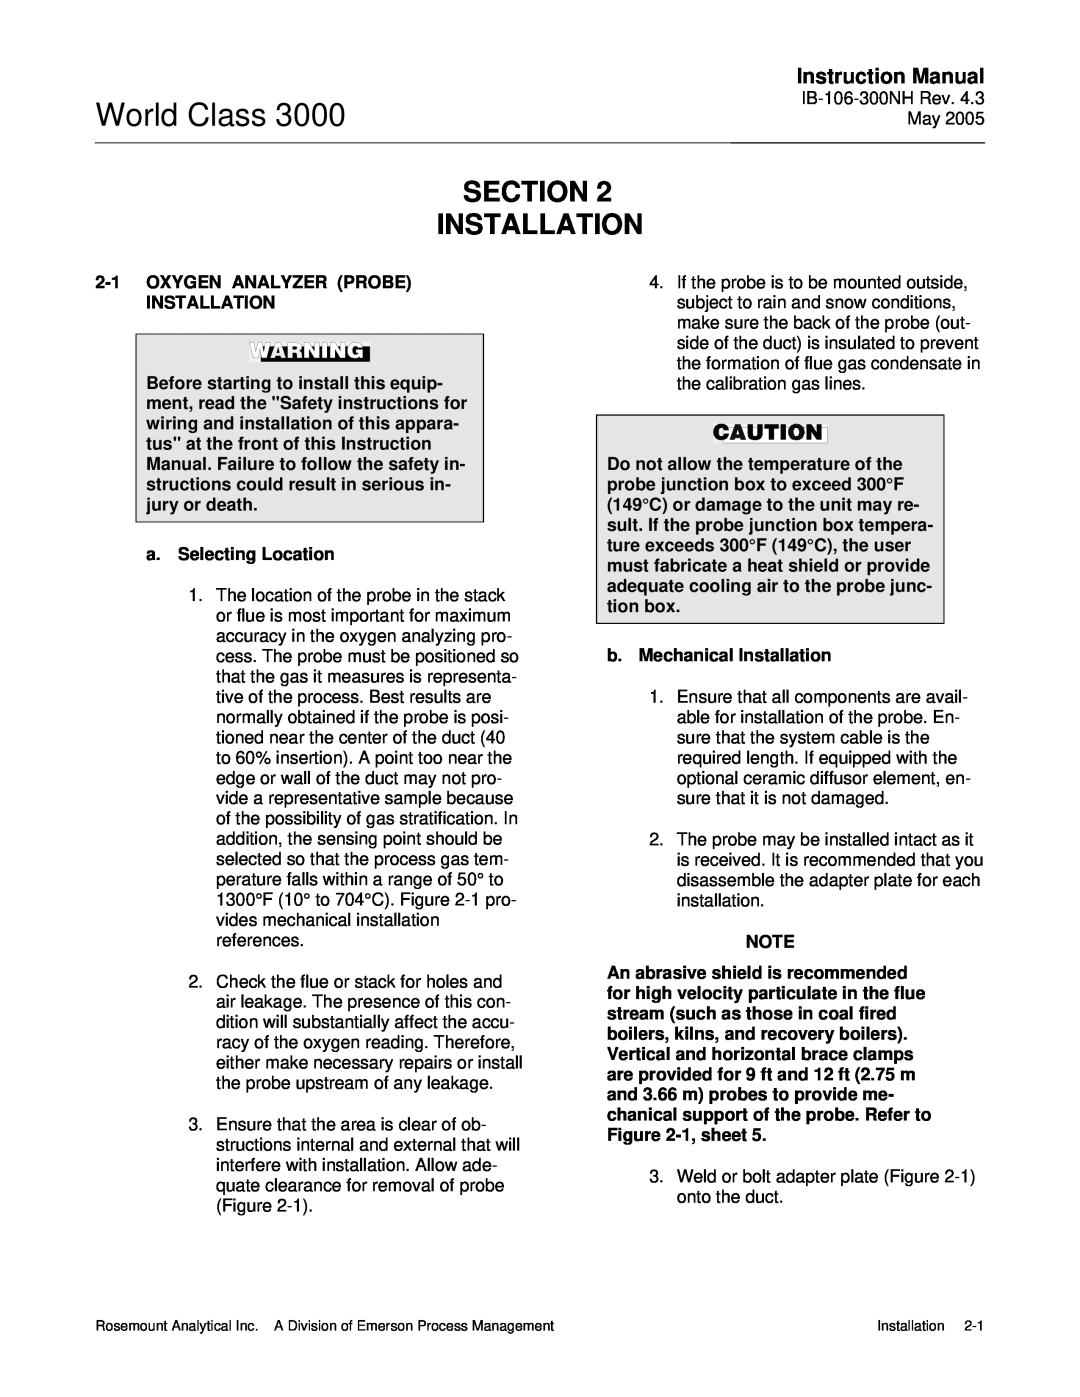 Emerson 3000 Section Installation, World Class, Instruction Manual, 2-1OXYGEN ANALYZER PROBE INSTALLATION 